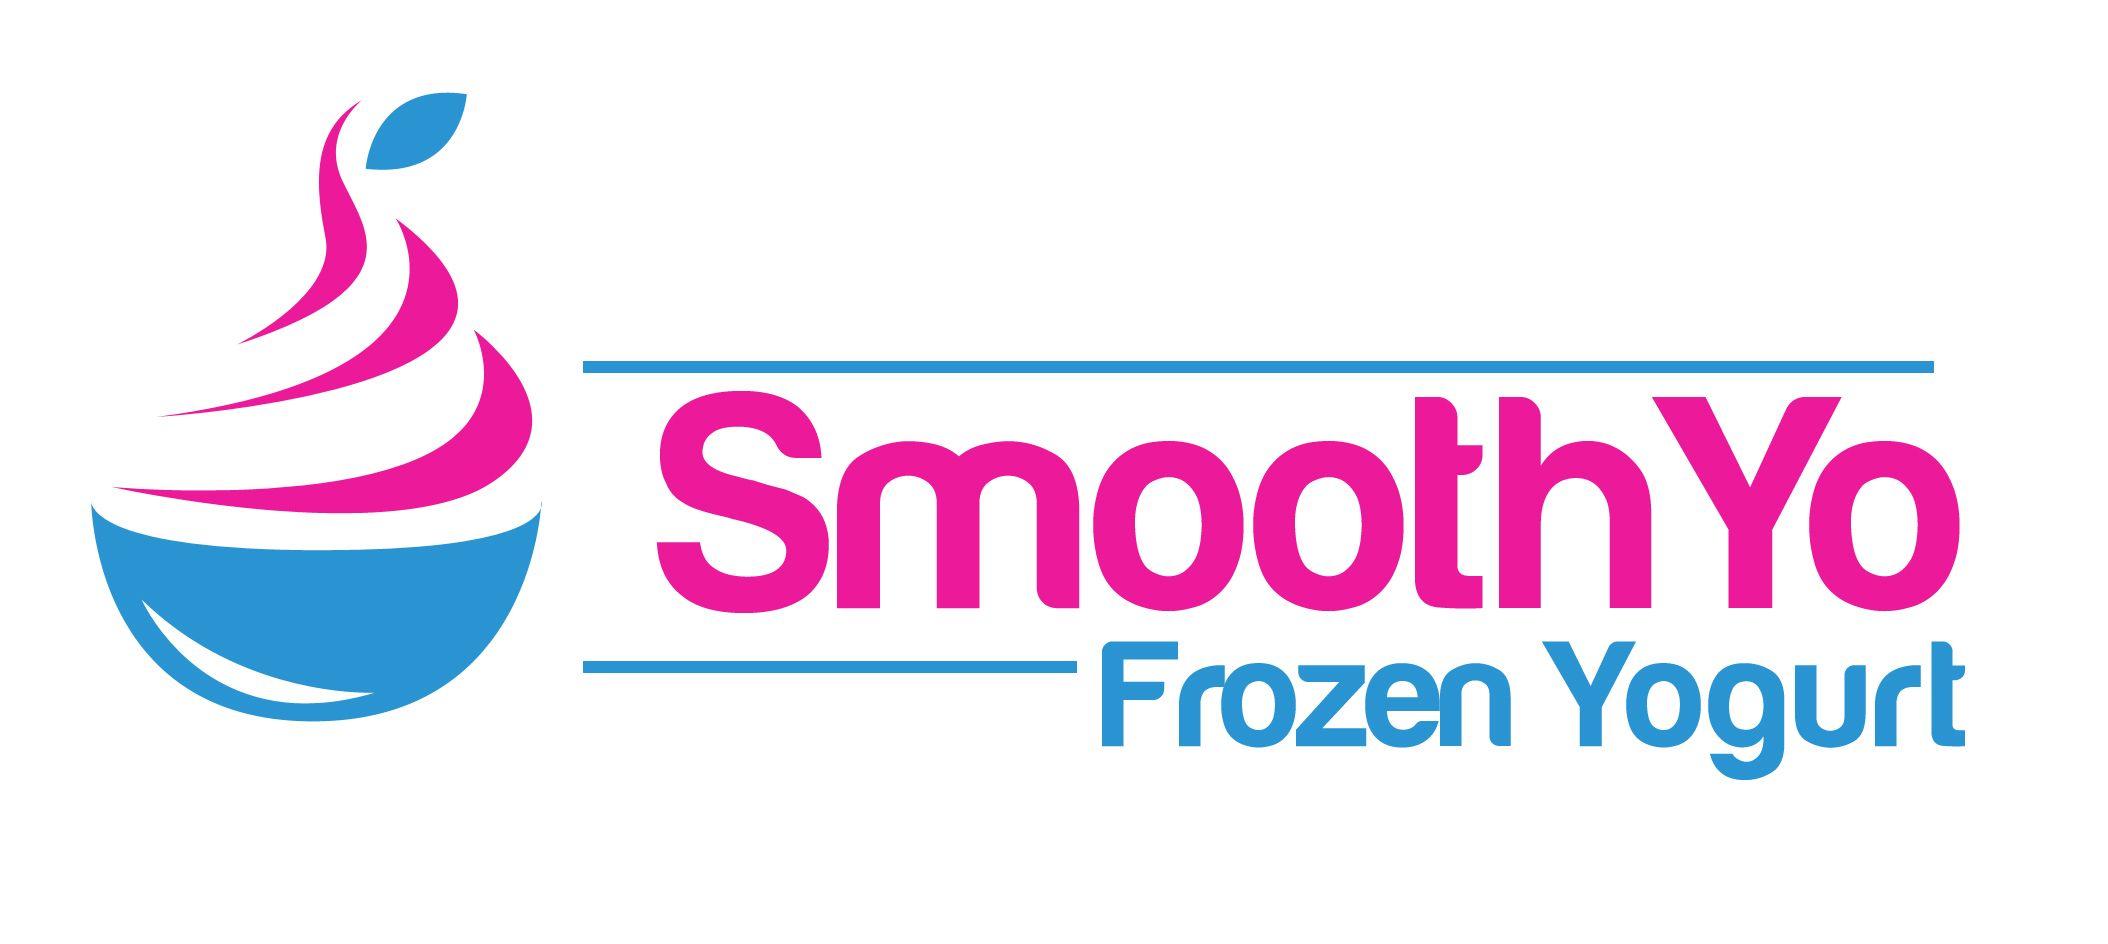 Frozen Yogurt Logo - Smooth Yo logo's Frozen YogurtNanci's Frozen Yogurt